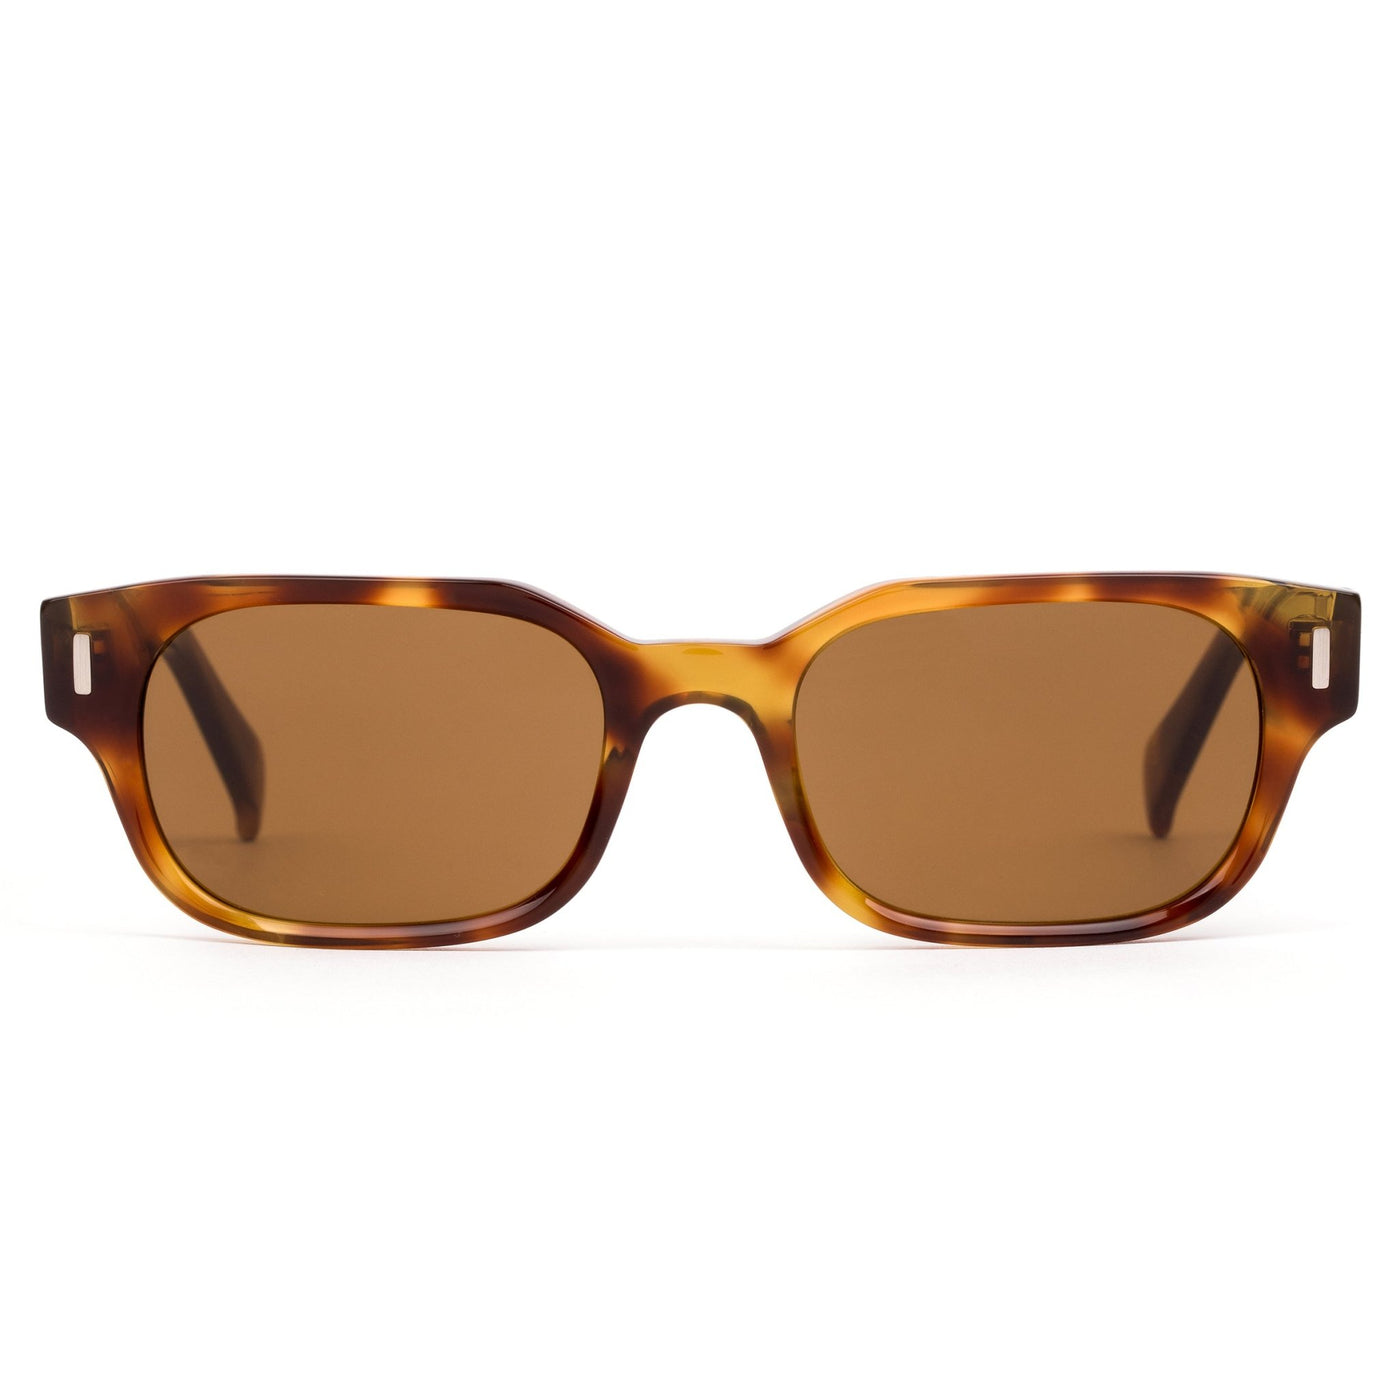 Tort sustainable sunglasses by OTIS eyewear called Untitled